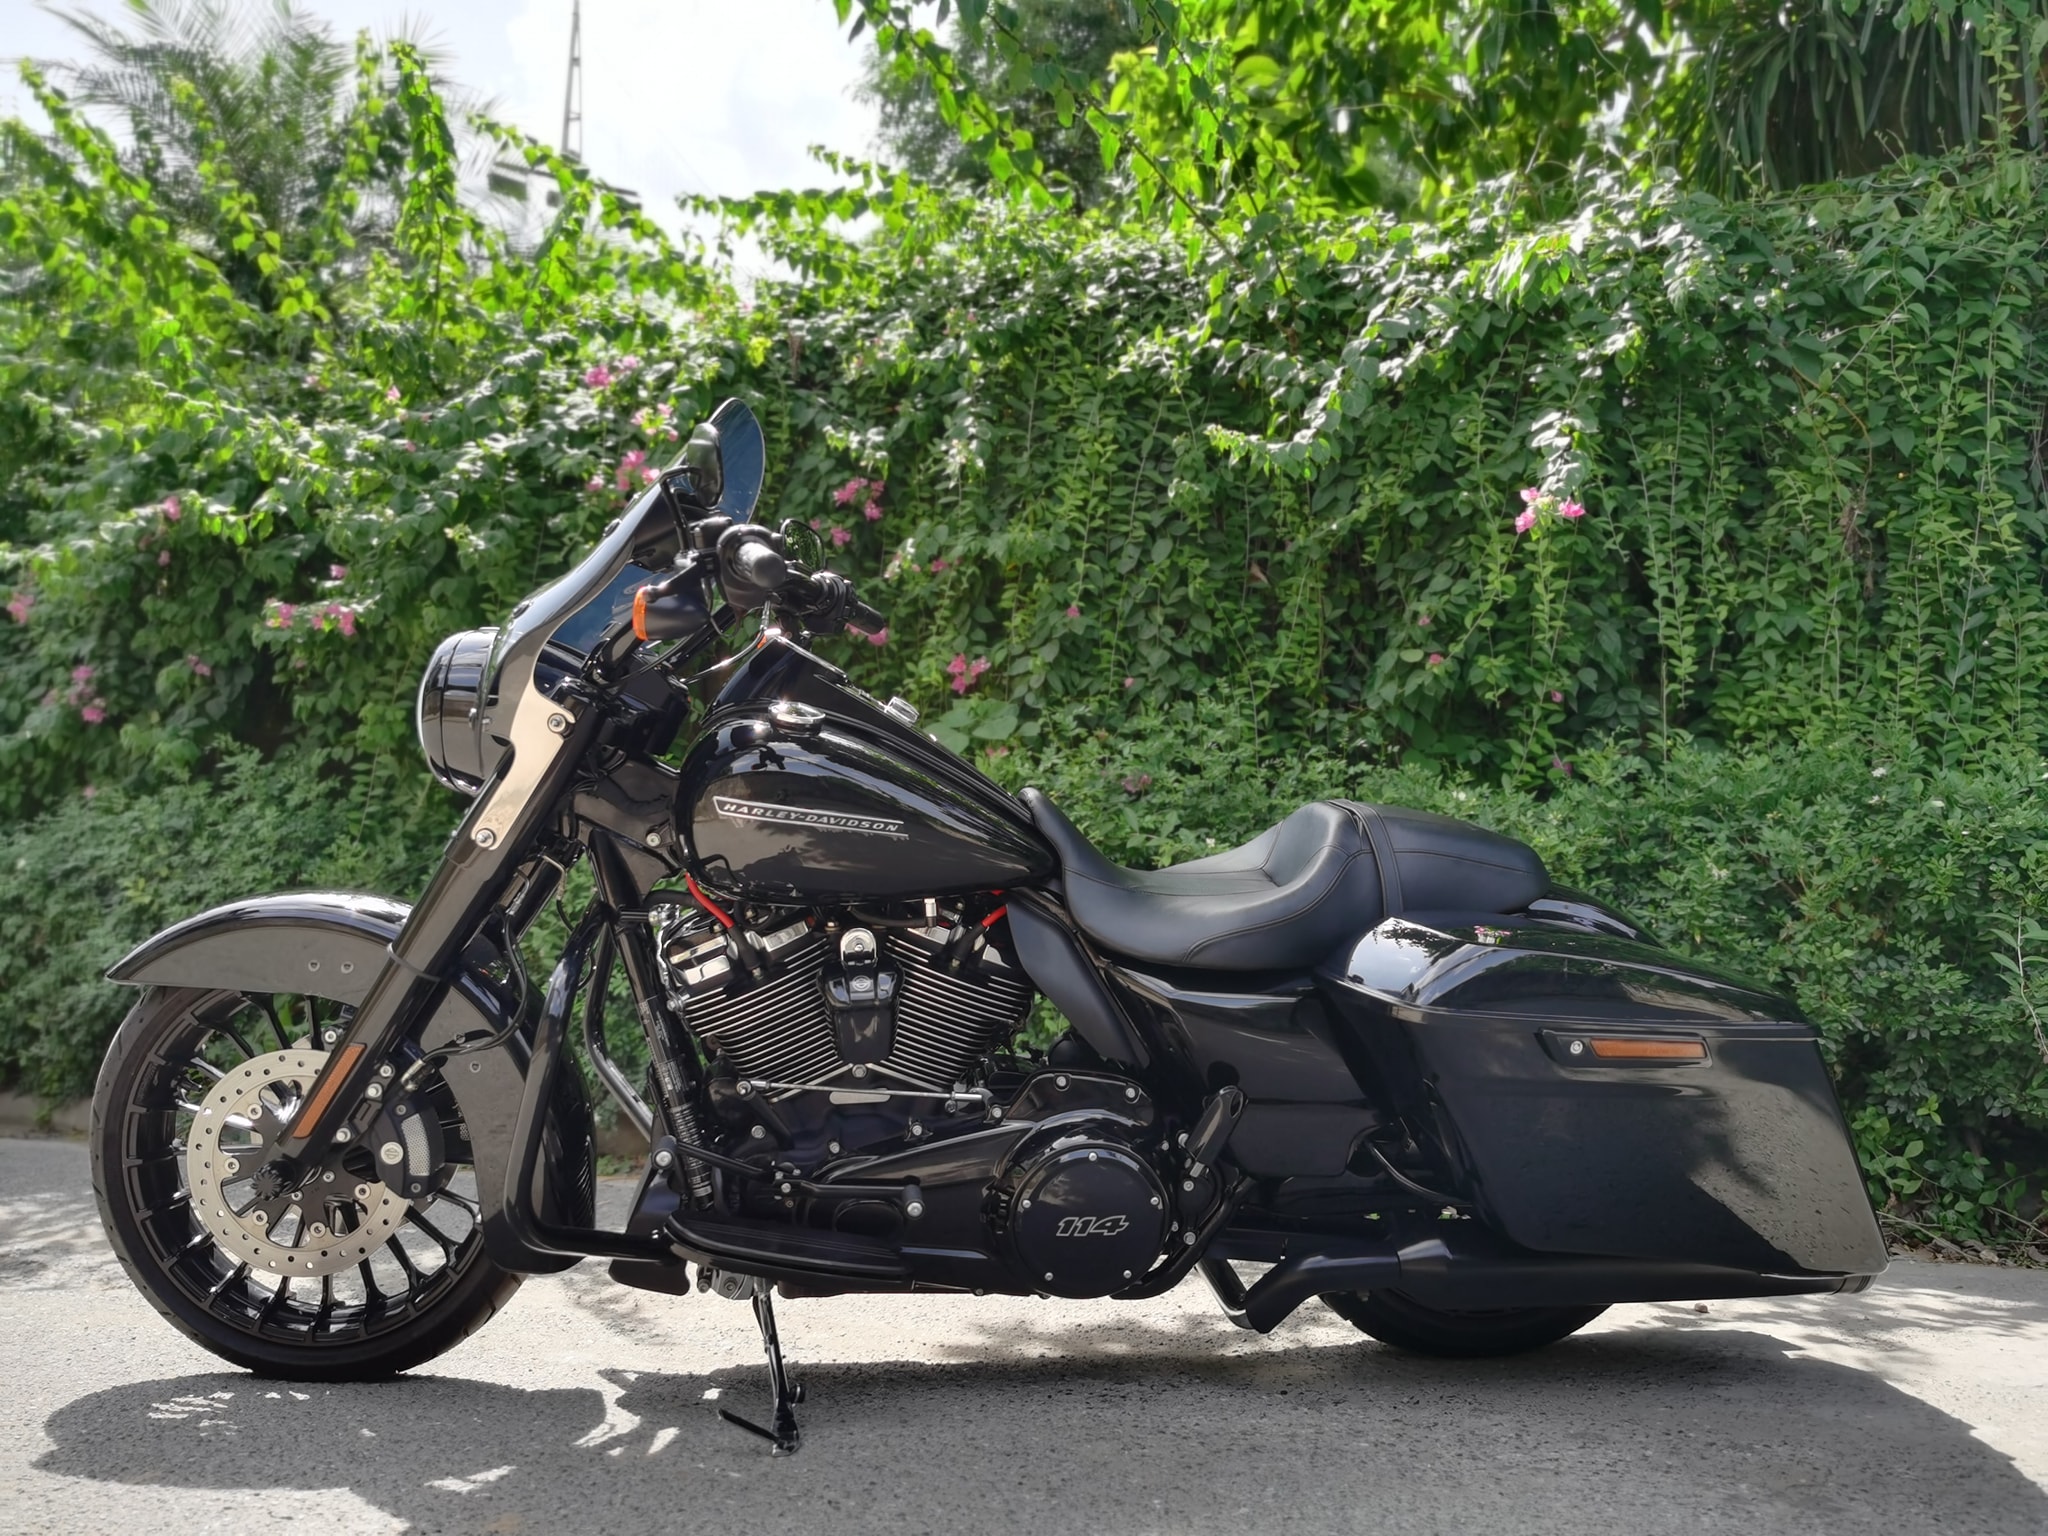 Harley Davidson RoadKing Special 2019